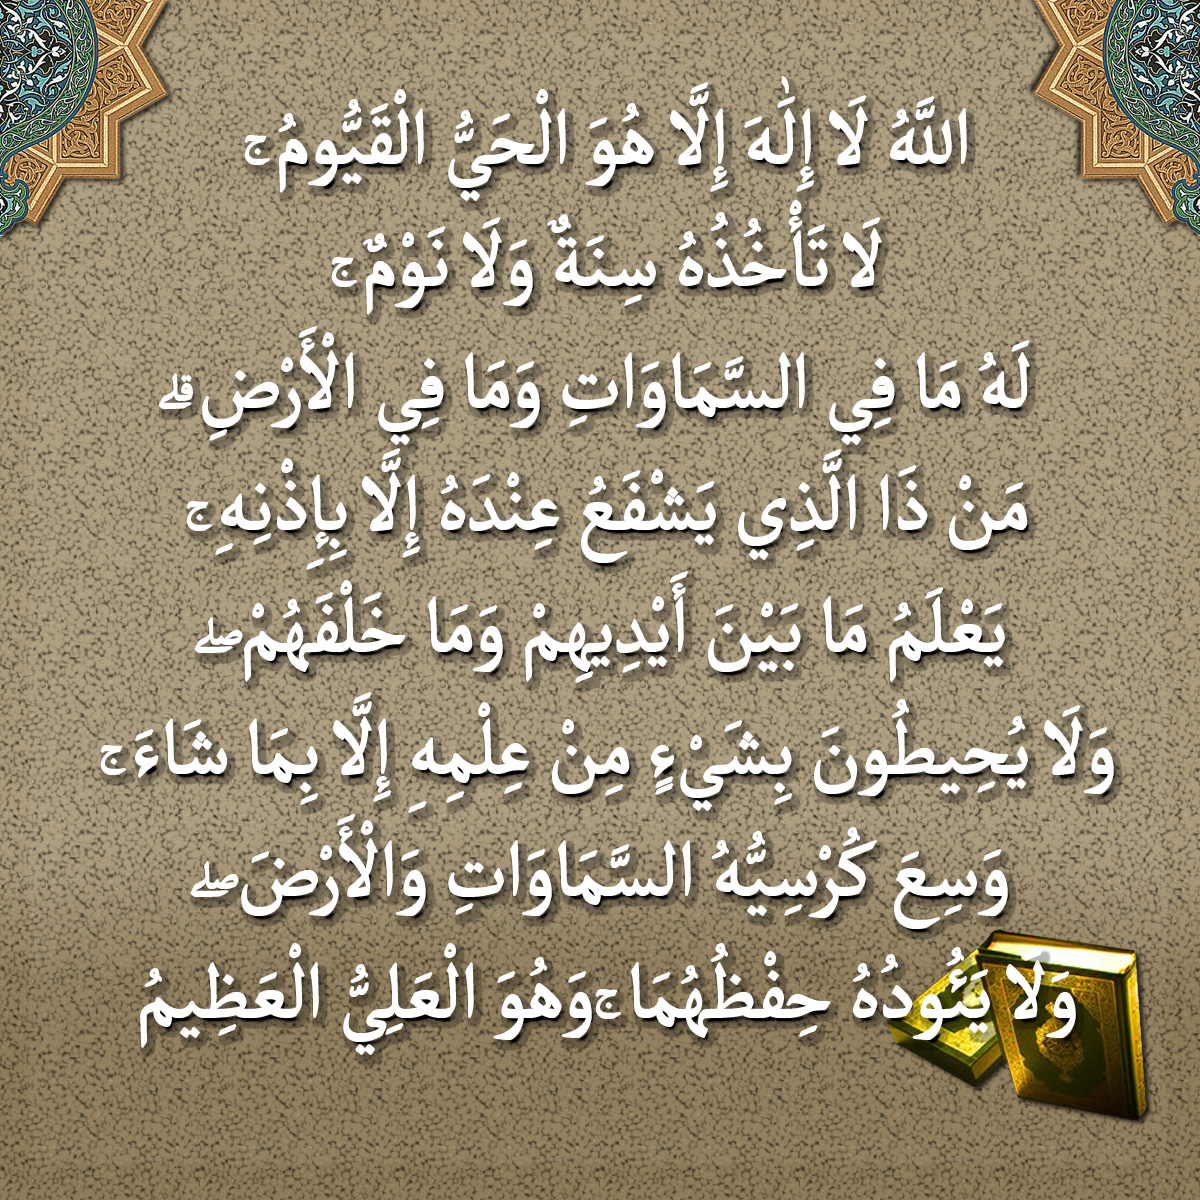 Posted by Admin Labels: ayatul kursi wallpaper , Qurani ayat